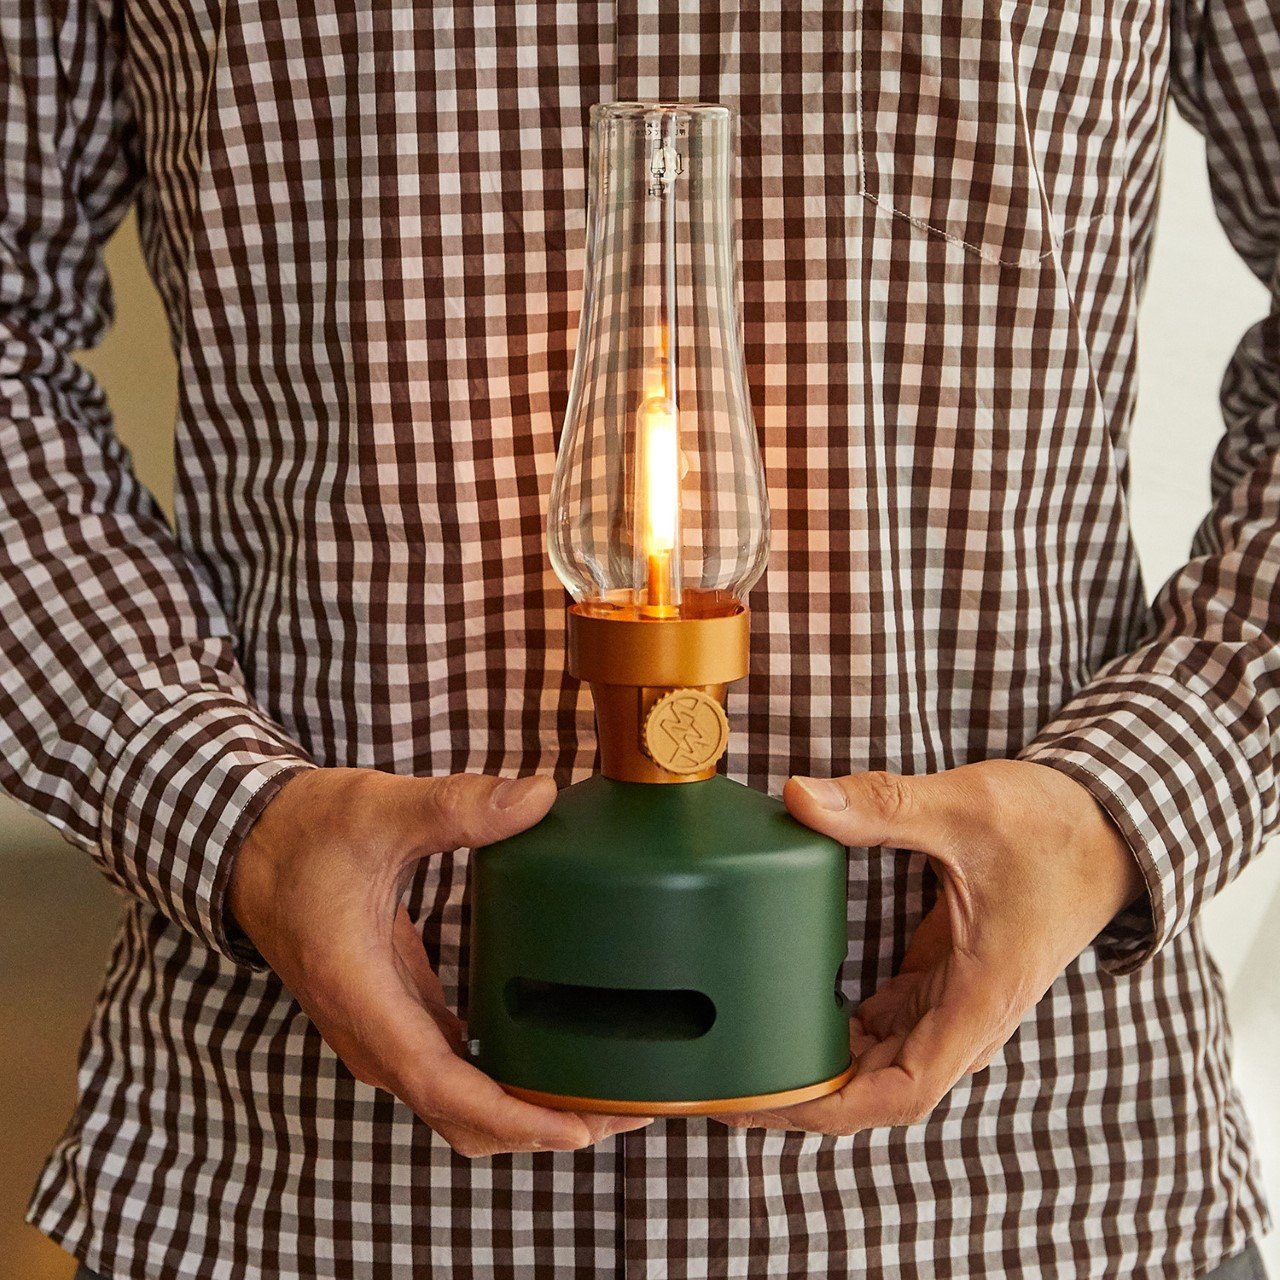 LED Lantern Speaker by Keen Hsu